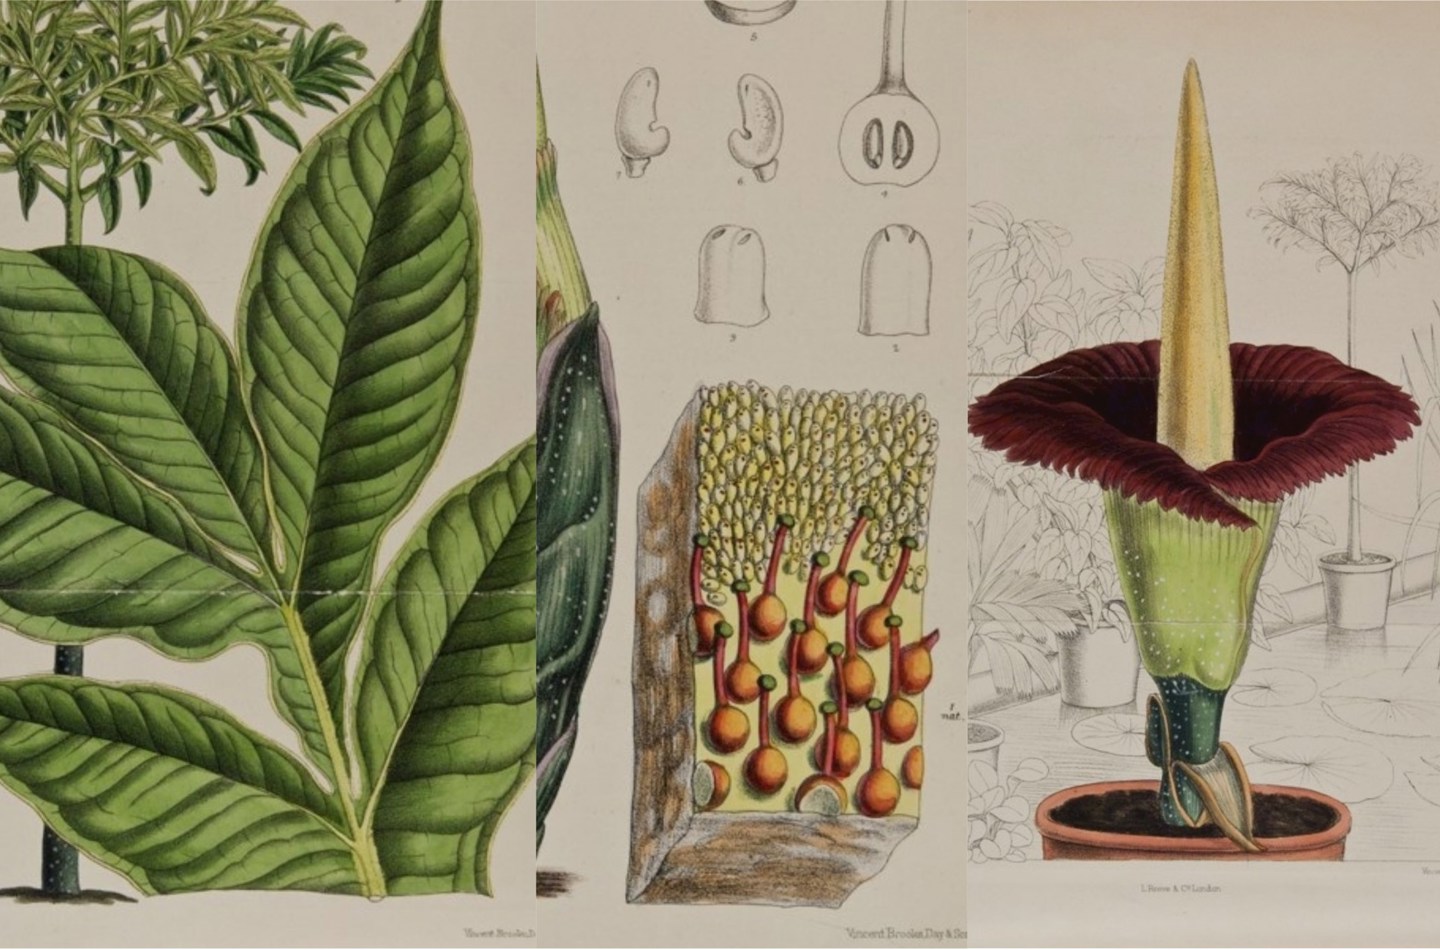 Curtis's Botanical Magazine volume of 1891 (plates 7153, 7154, 7155) - plates drawn by Matilda Smith.